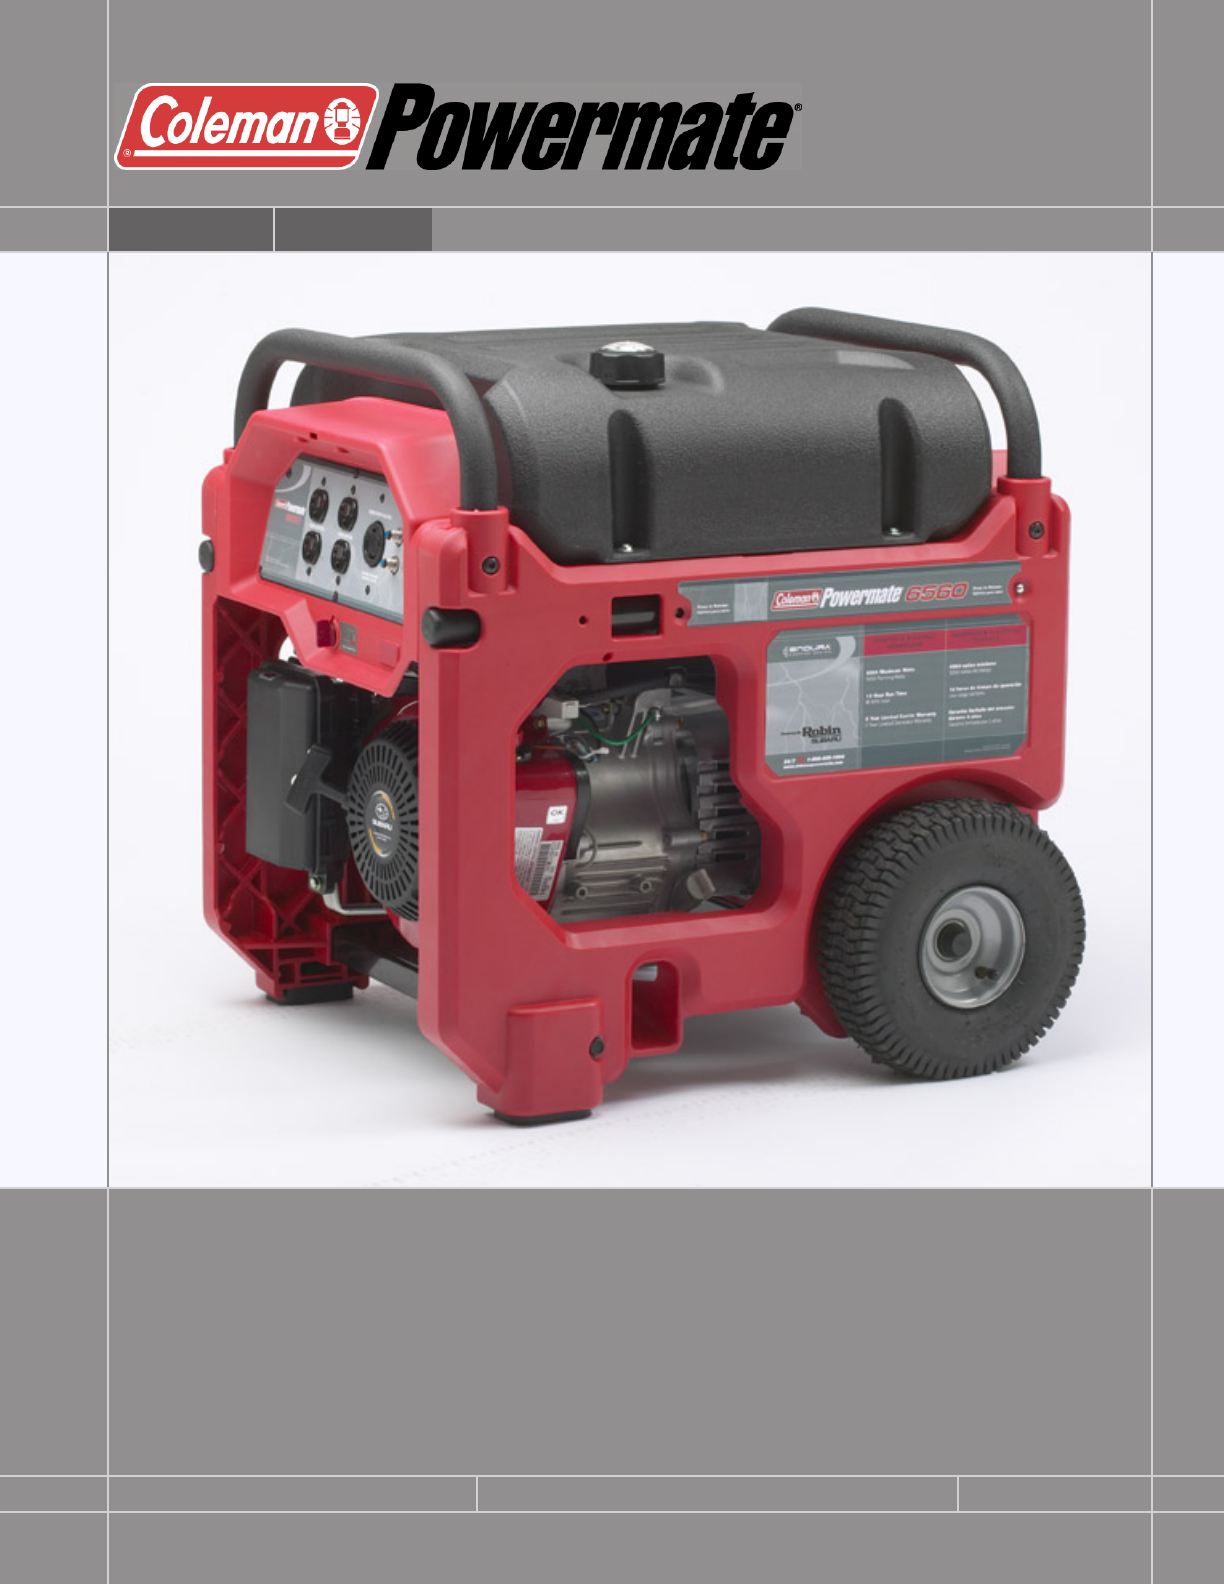 coleman powermate 6560 generator troubleshooting